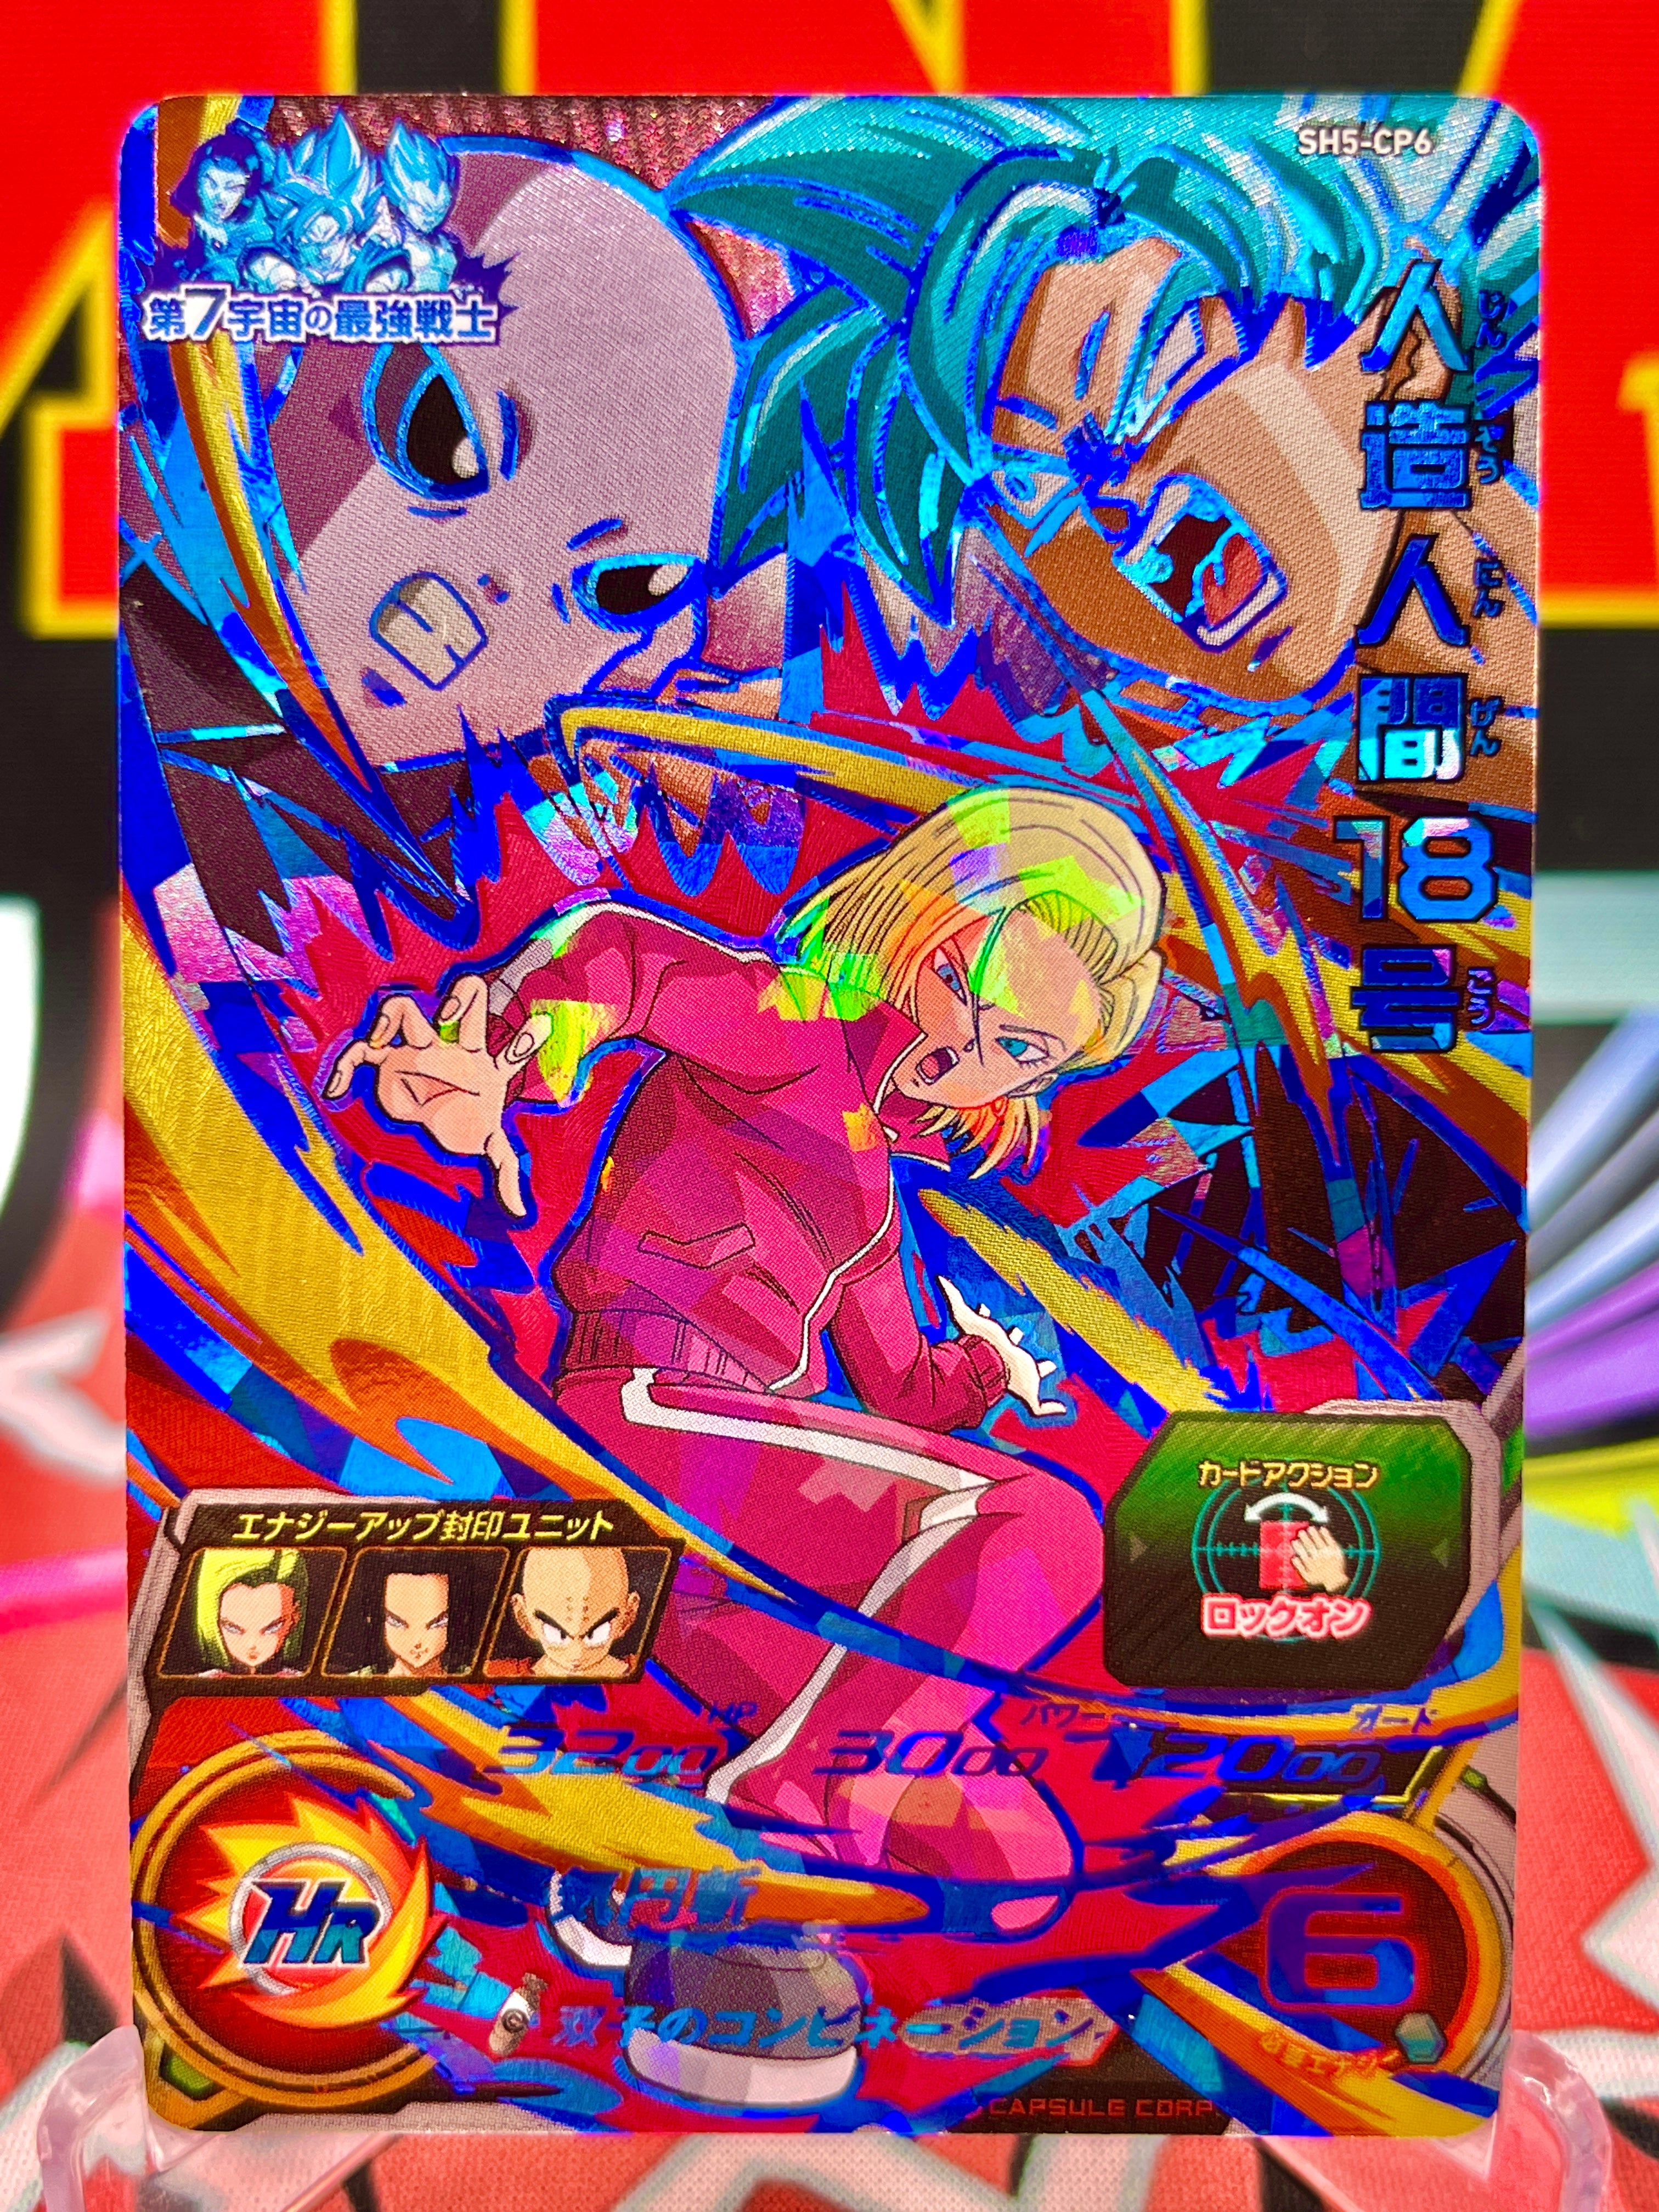 SH5-CP6 Android 18, Goku, & Jiren CP (2017)